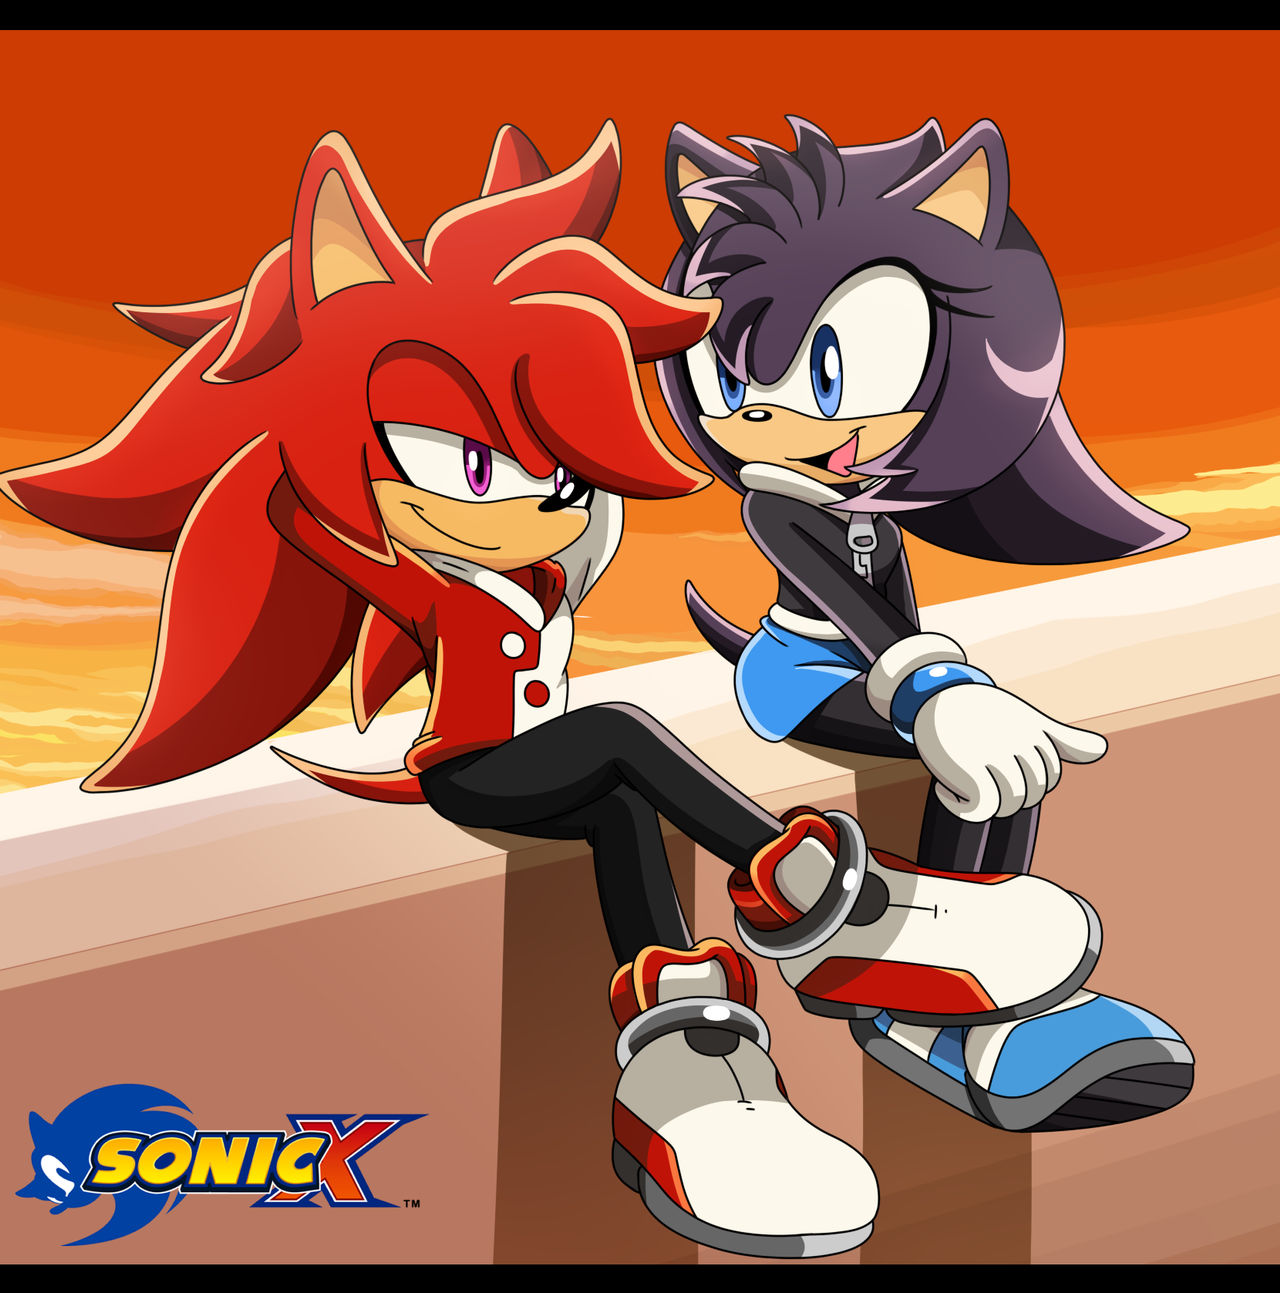 sonicfan79 on X: My Headcanon On Sonic's Age #SONIC #SonicTheHedegehog  #SonicTheHedgehog #sonicfanart #SonicTheHedeghog #sonicadventure  #sonicforces #sonicfrontiers  / X